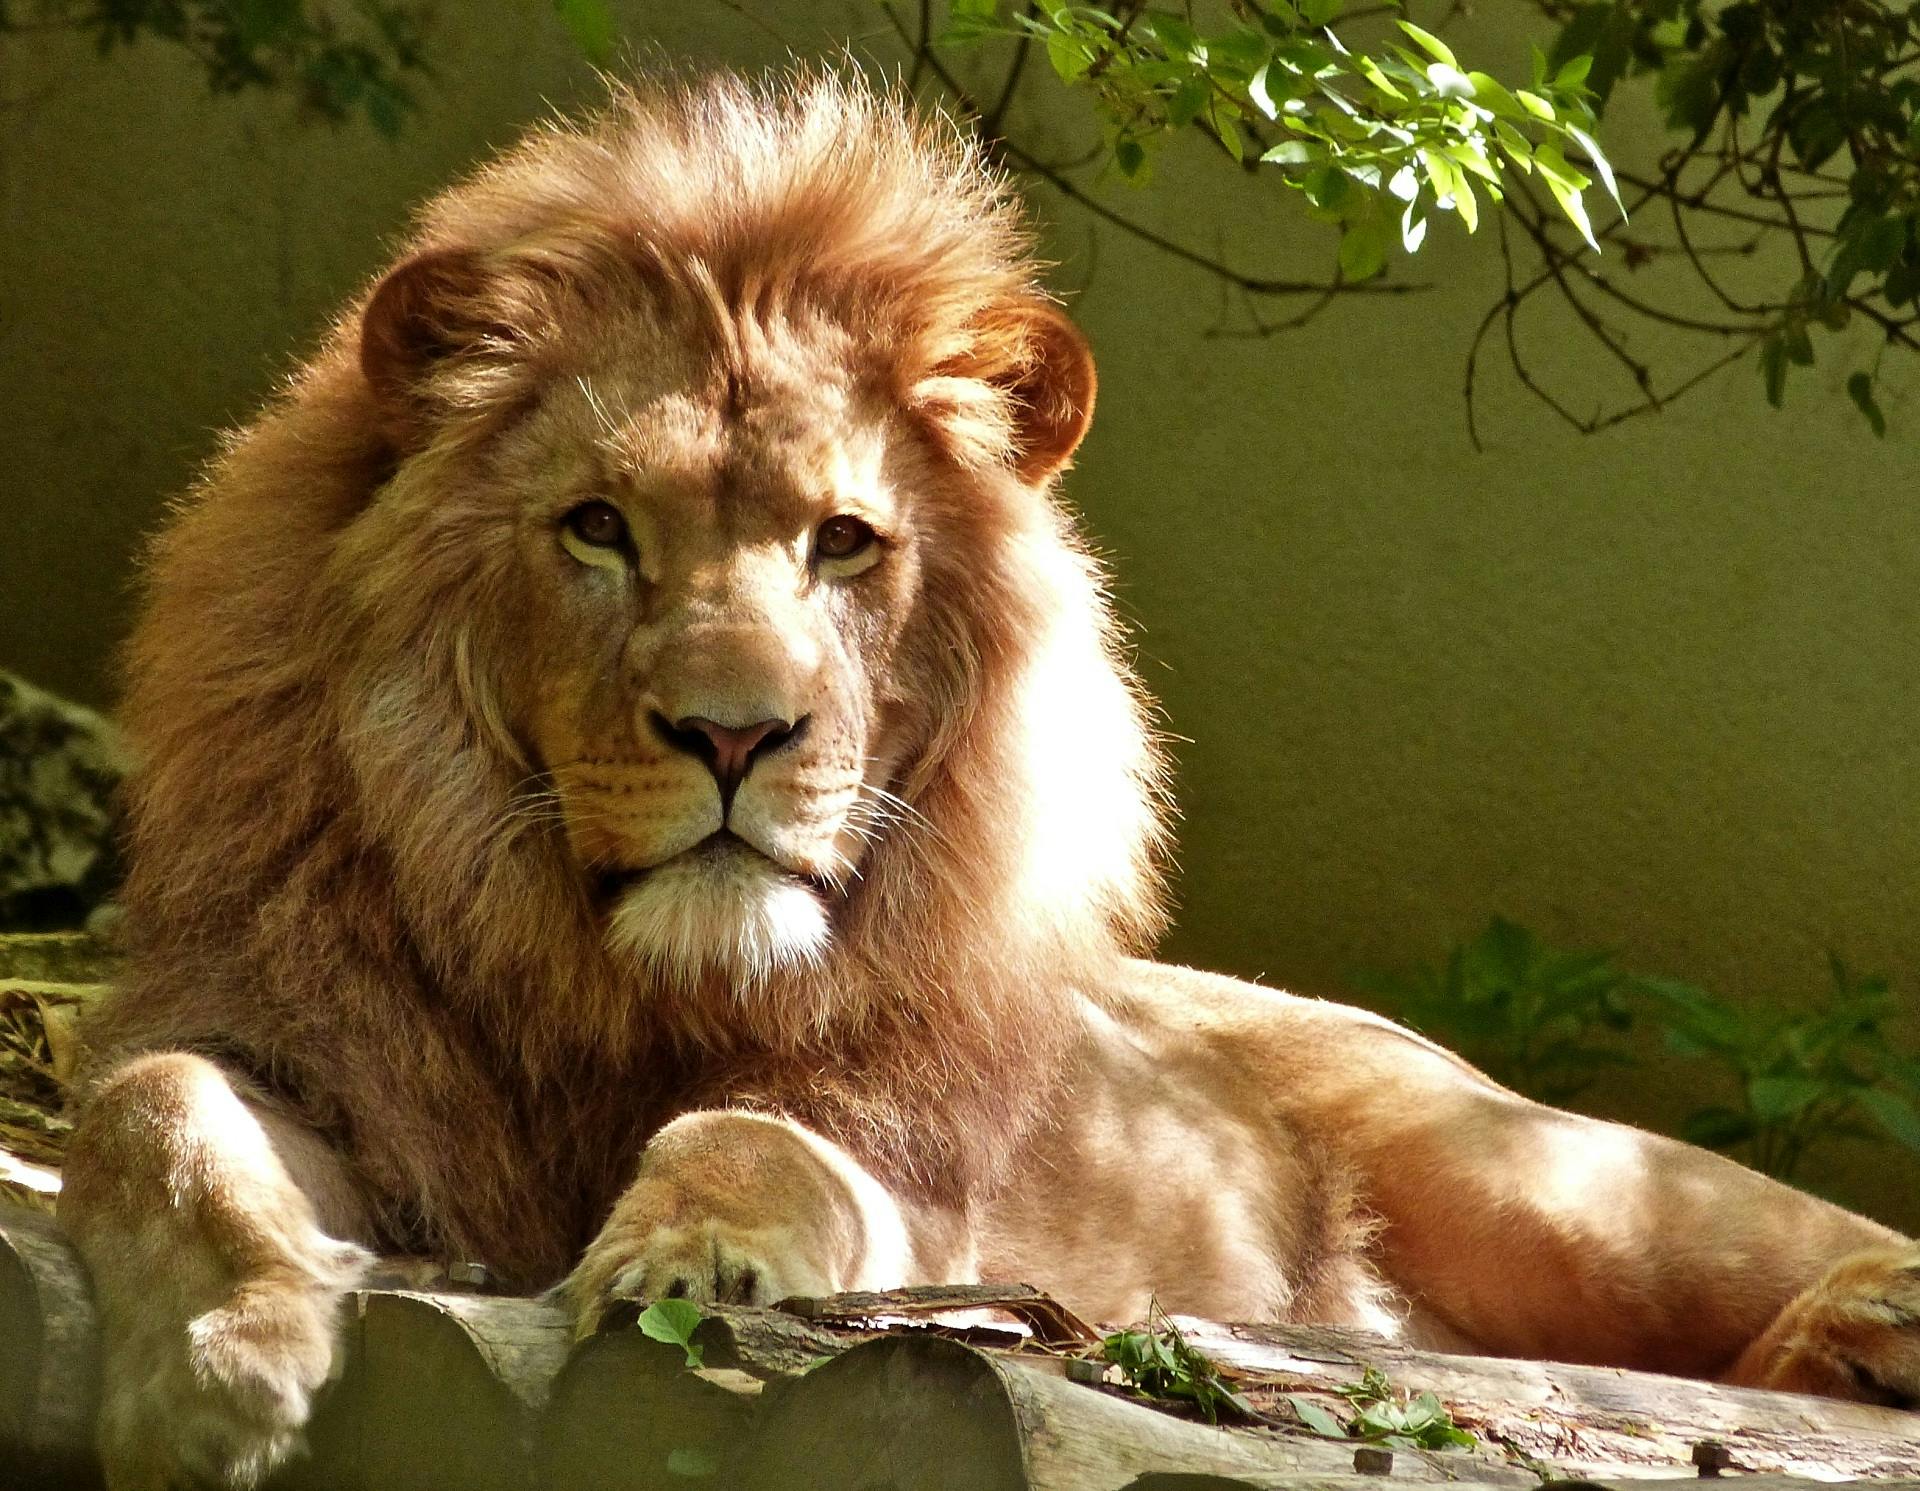 4,000+ Best Zoo Photos · 100% Free Download · Pexels Stock Photos